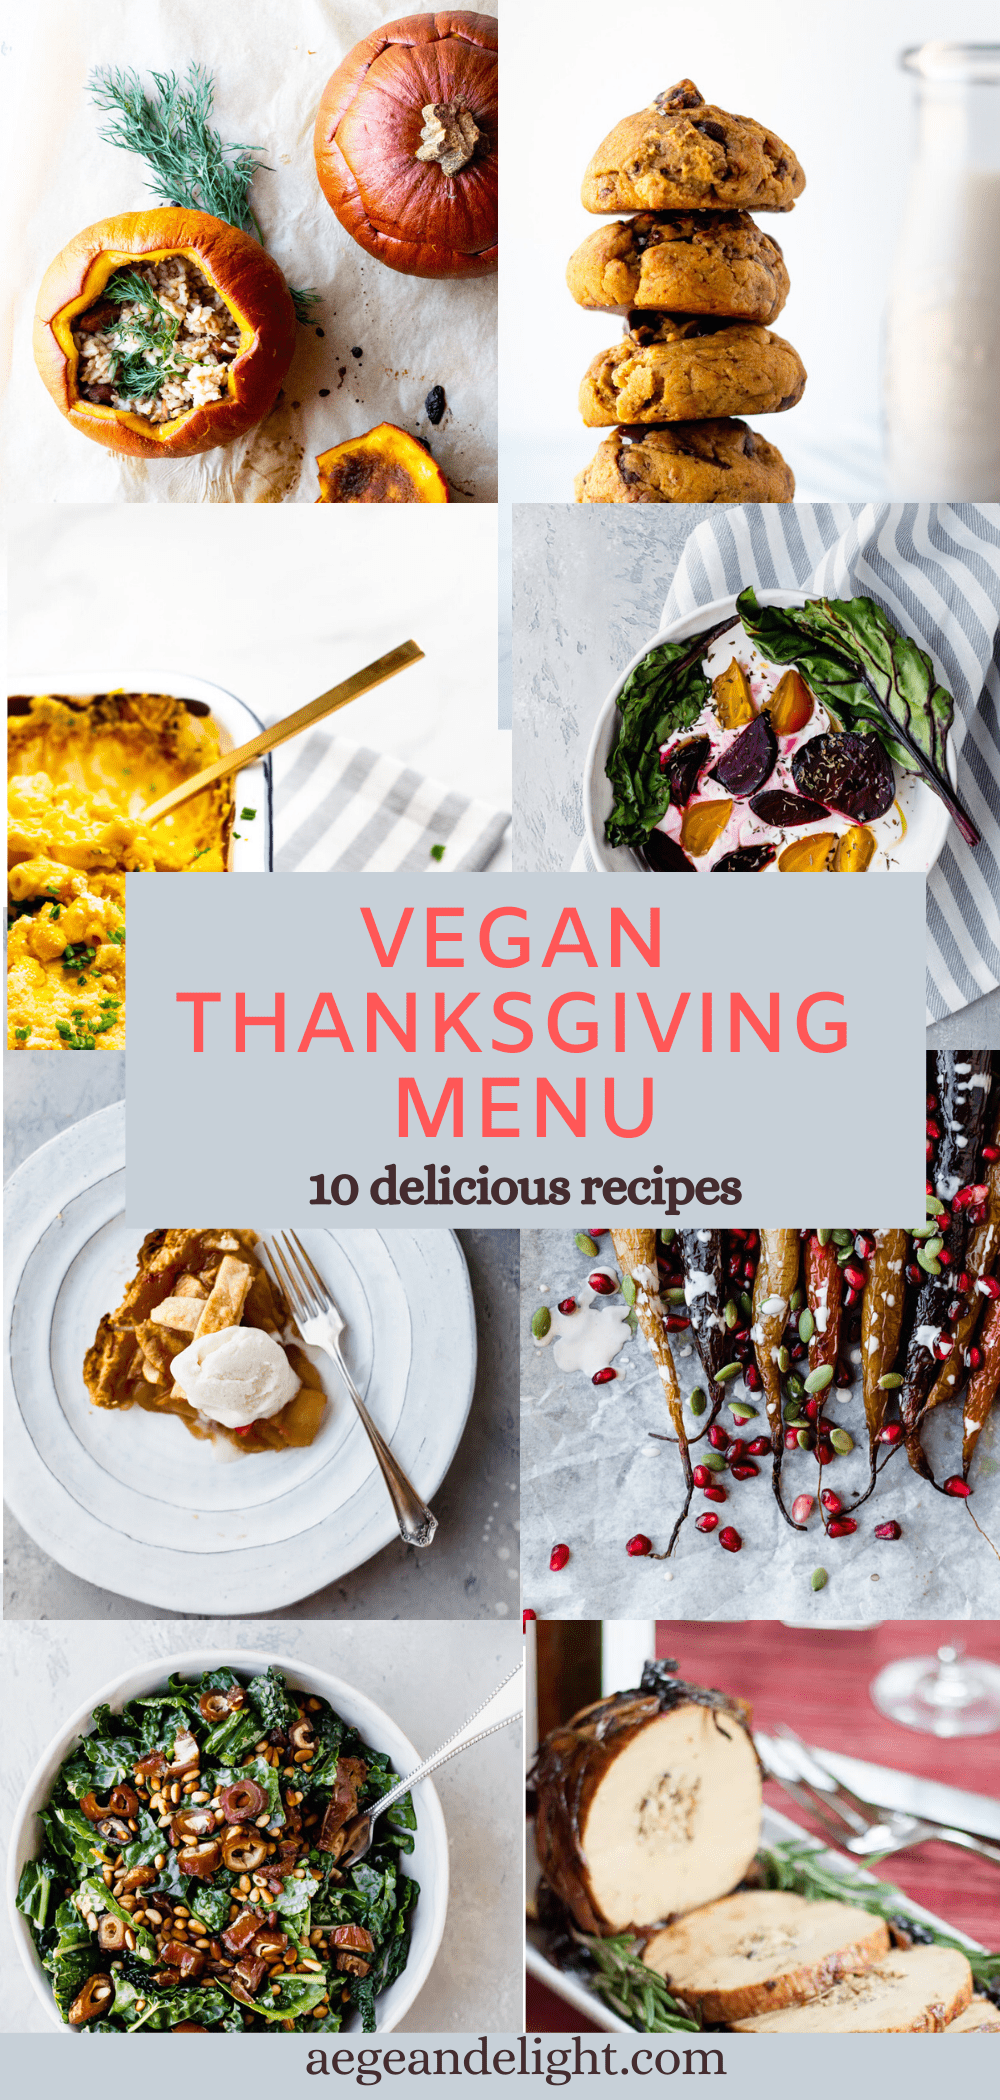 Thanksgiving Recipes for Vegans - 10 Delicious Ideas | Aegean Delight